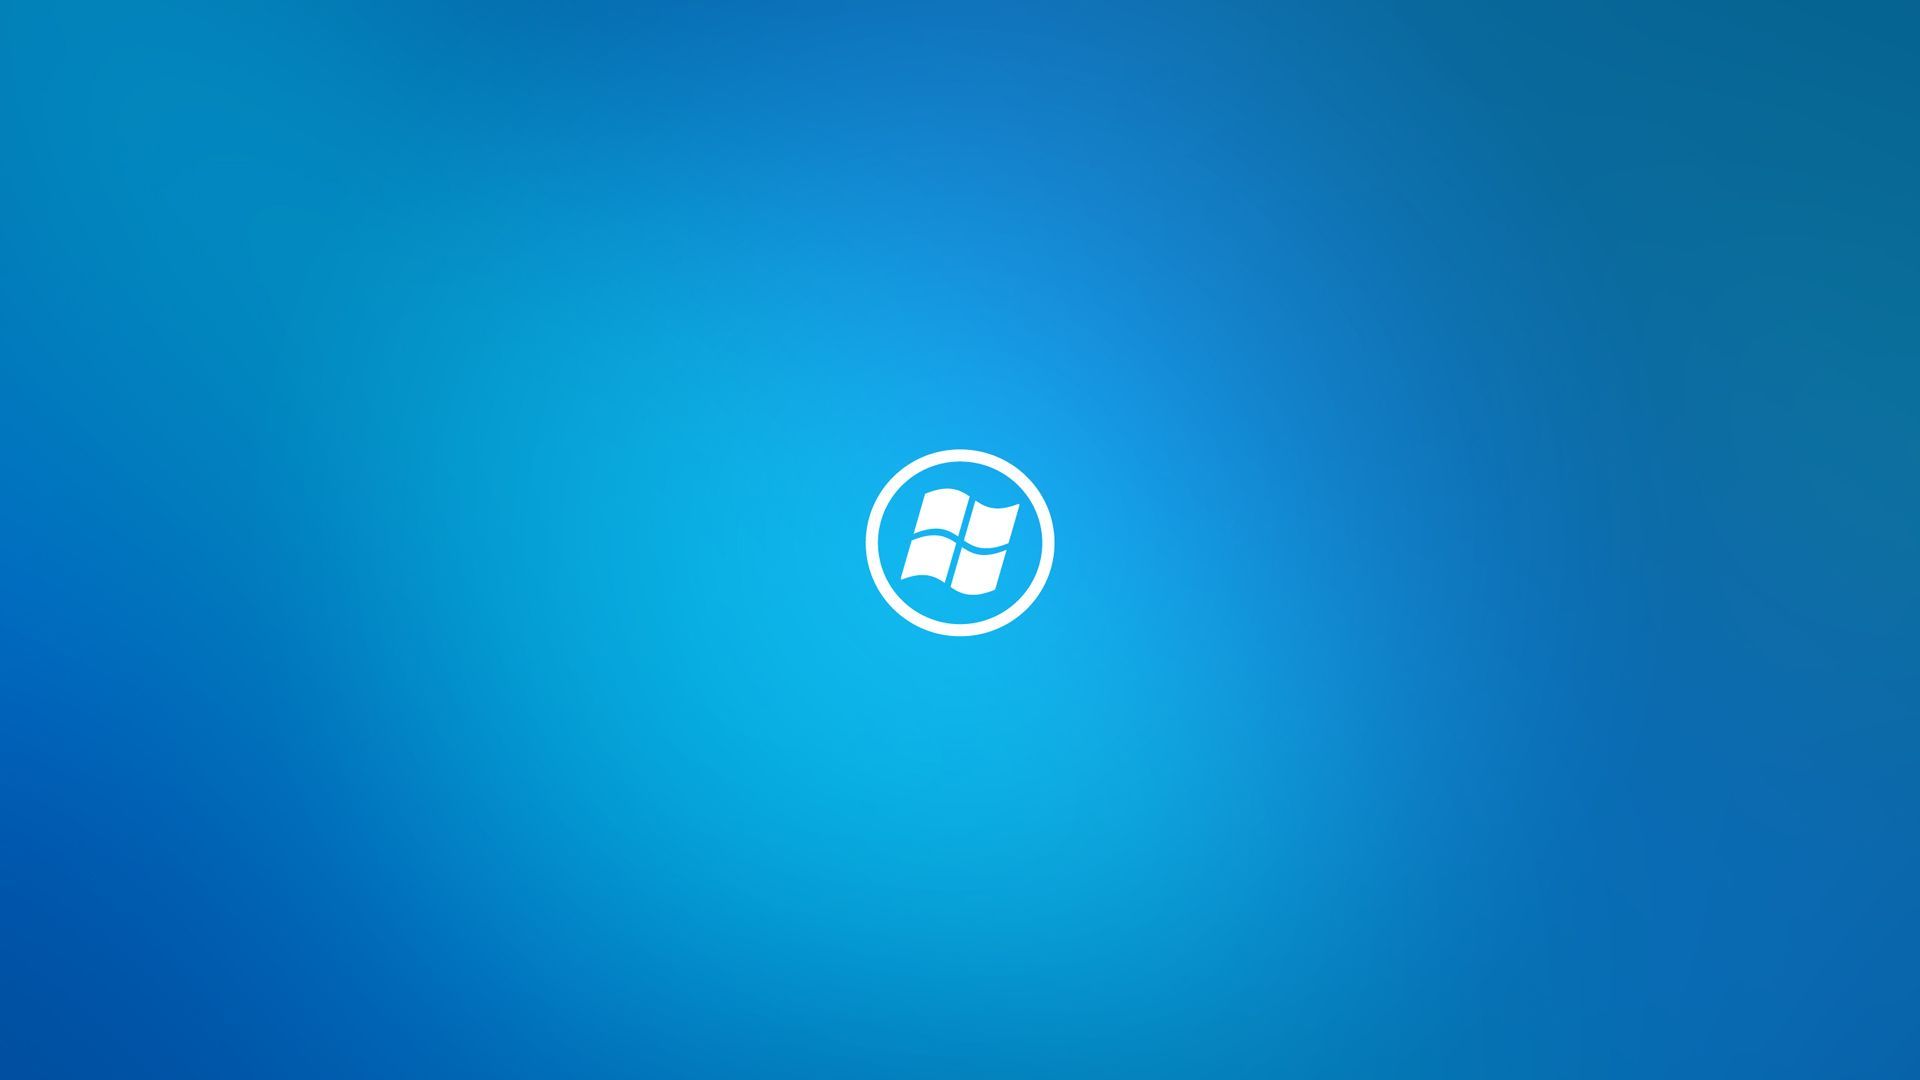 Windows-8-Official-Blue-HD-Wallpapers.jpg